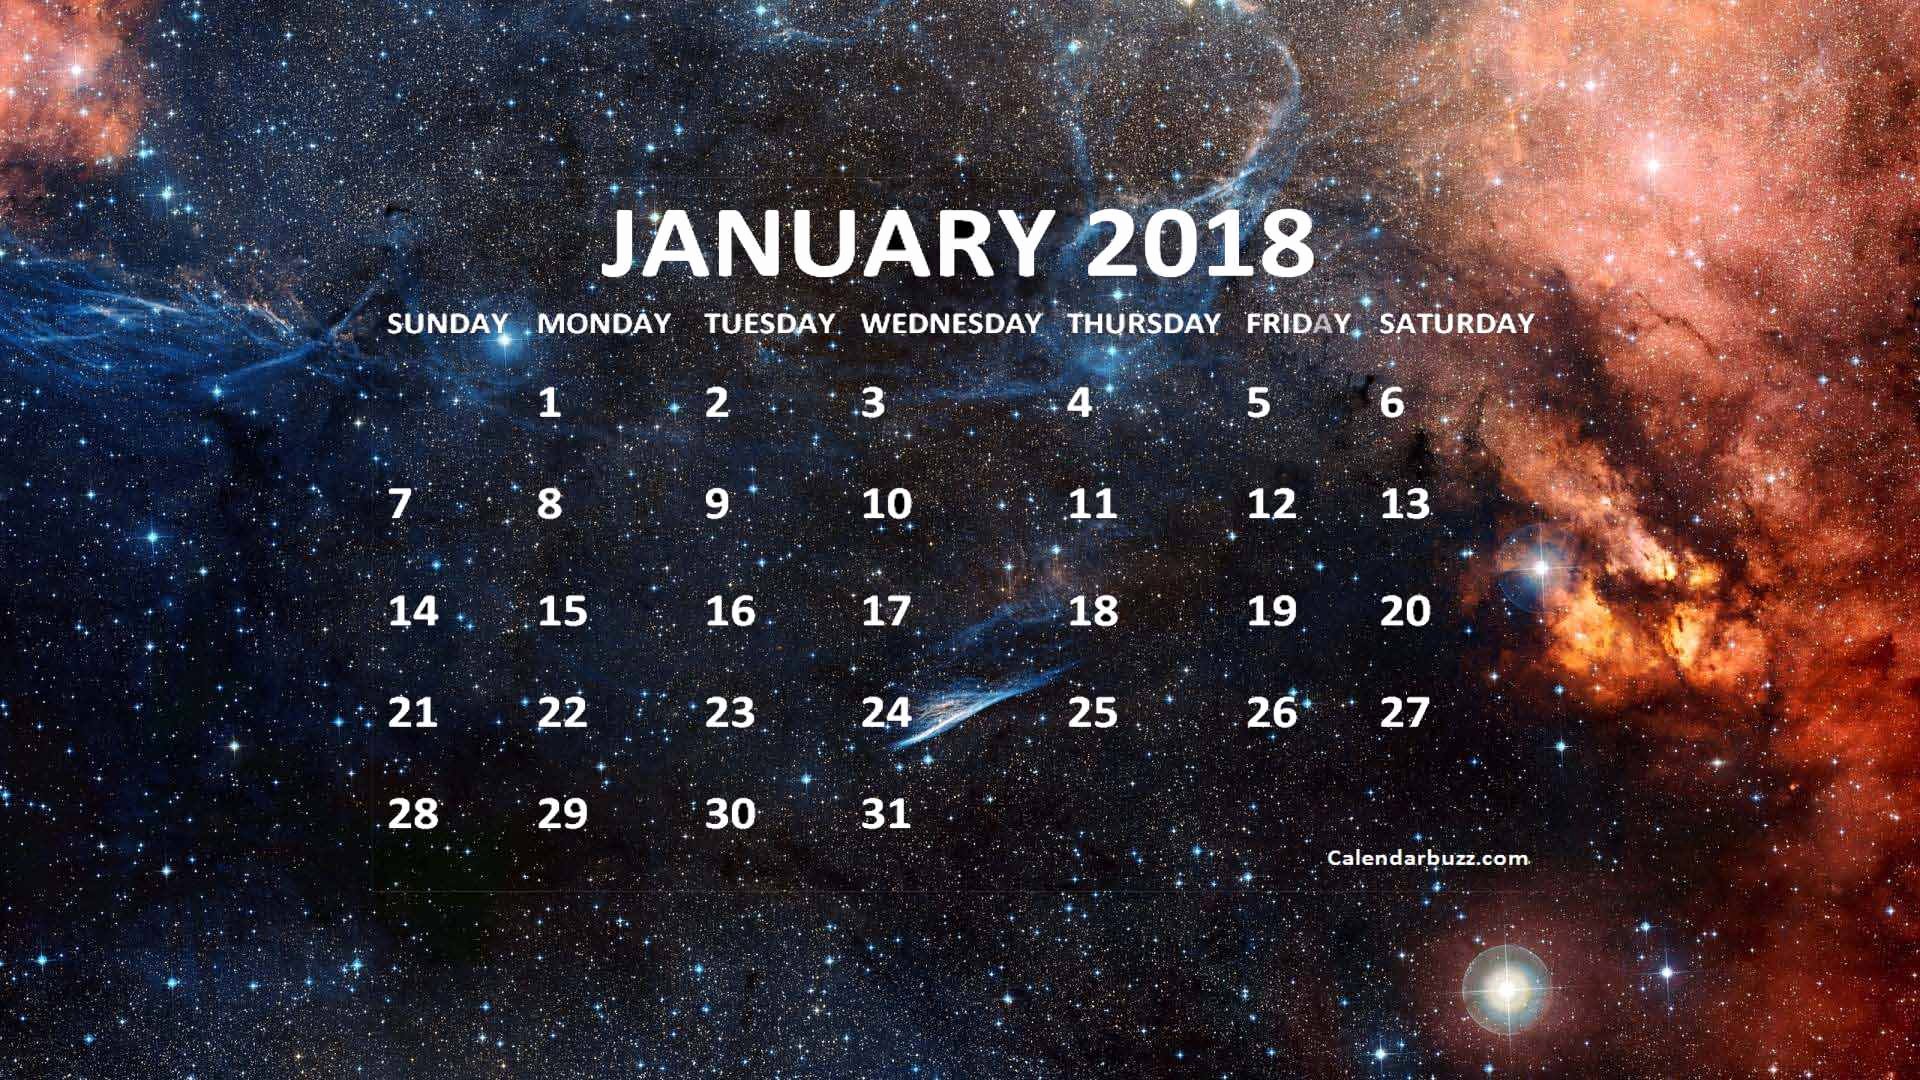 Suze orman Promissory Note Fresh 10 Amazing January 2018 Nature Printable Calendars Free